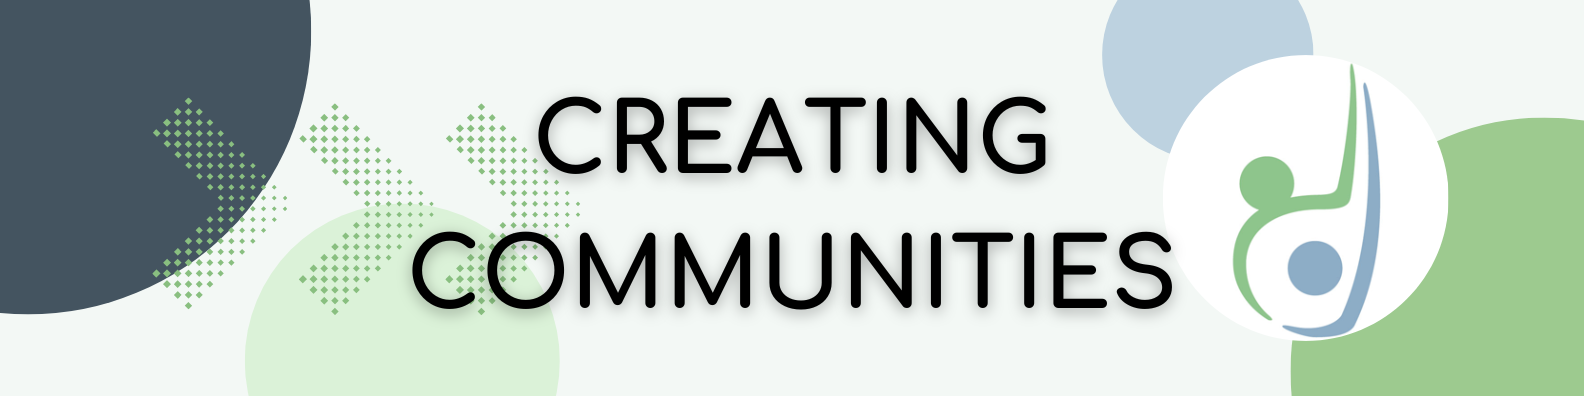 Web banner that reads &quot;Creating Communities&quot;